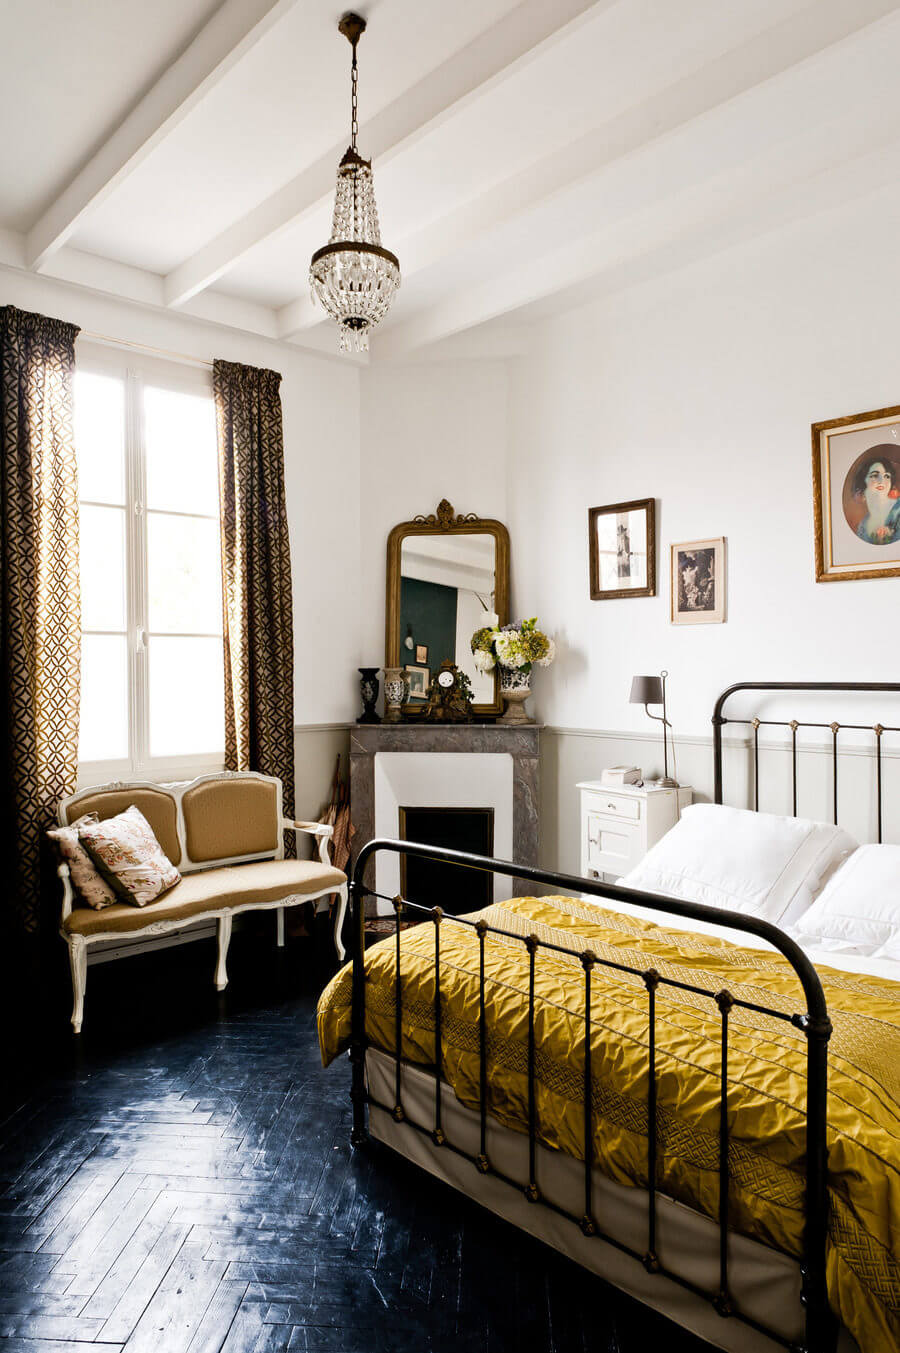 21 vintage bedroom decor ideas